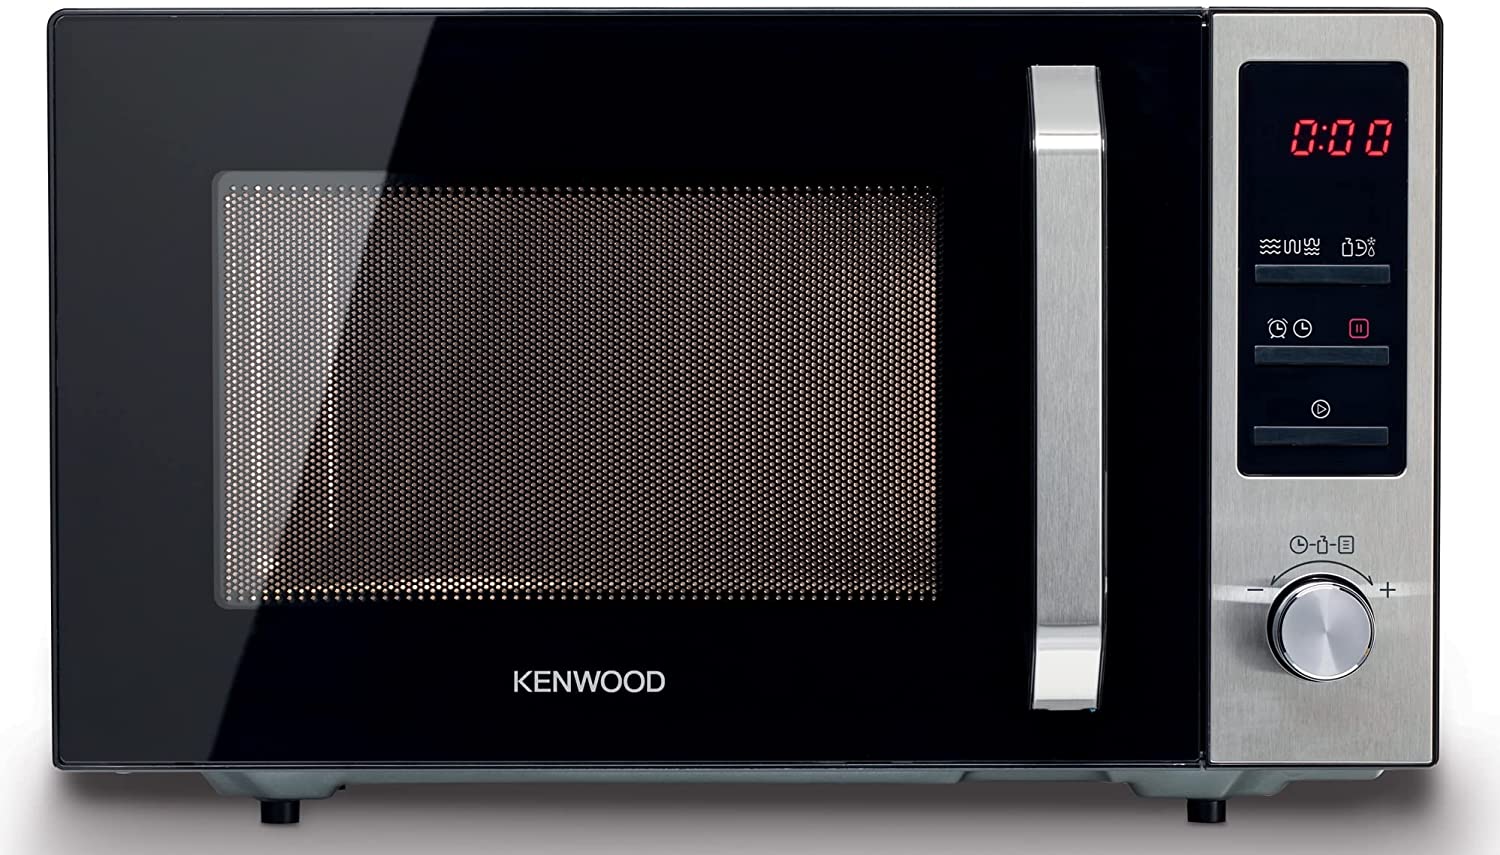 Kenwood MWM25.000BK | Kenwood microwave oven